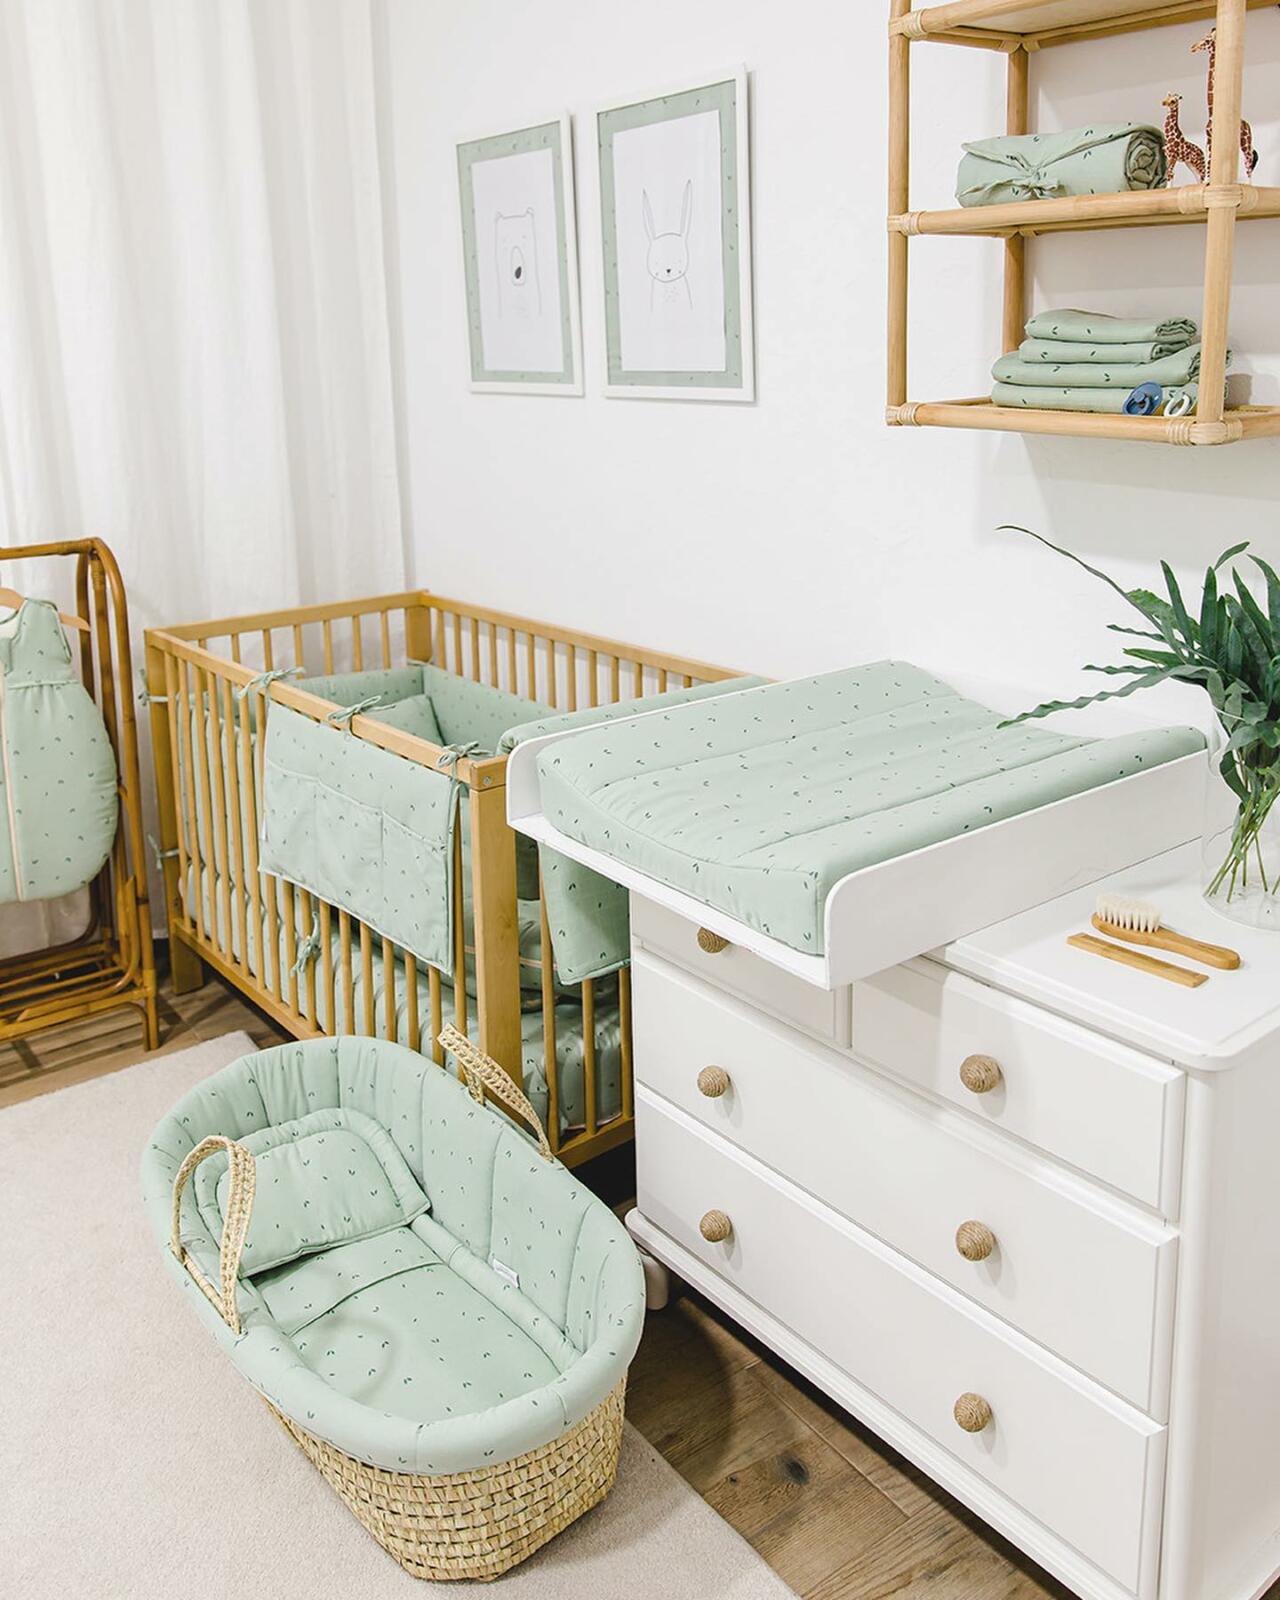 A sage green nursery with a crib, dresser, and wicker basket.